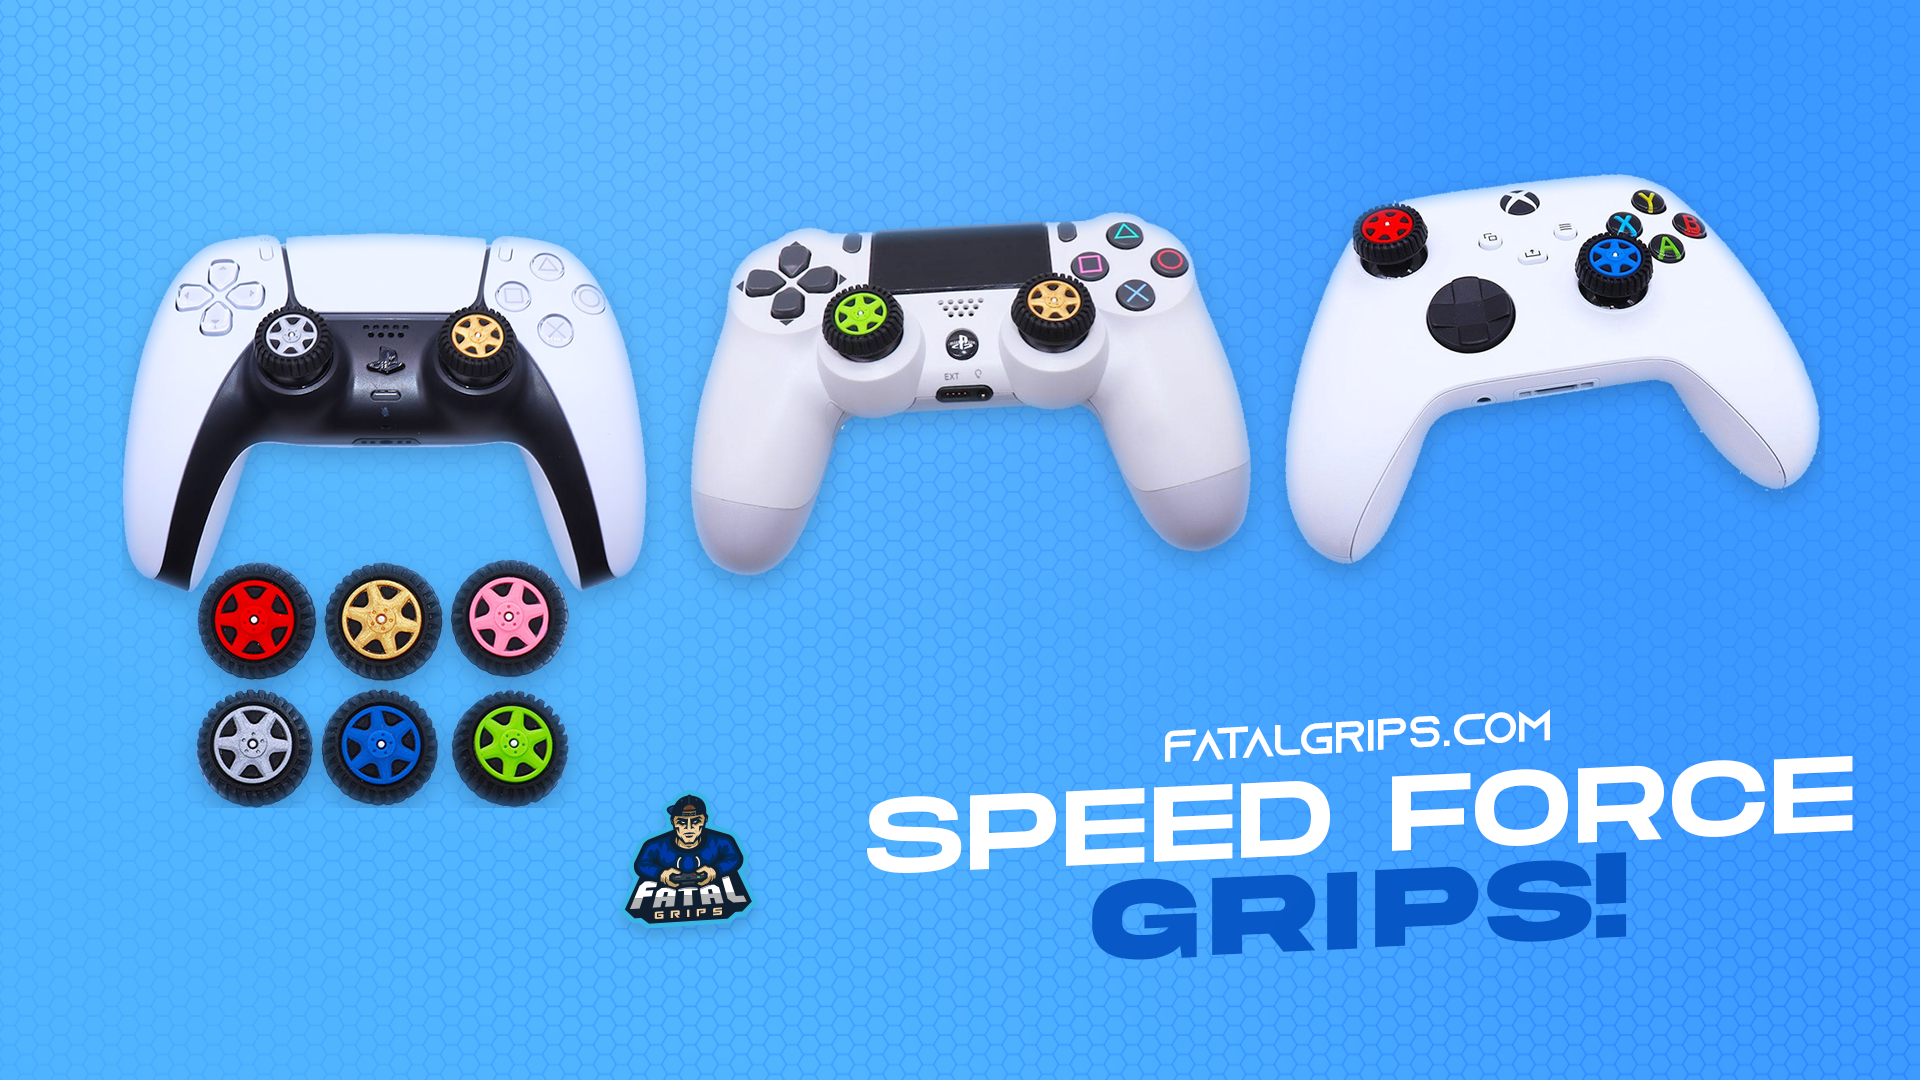 Speed Force Grips - Fatal Grips